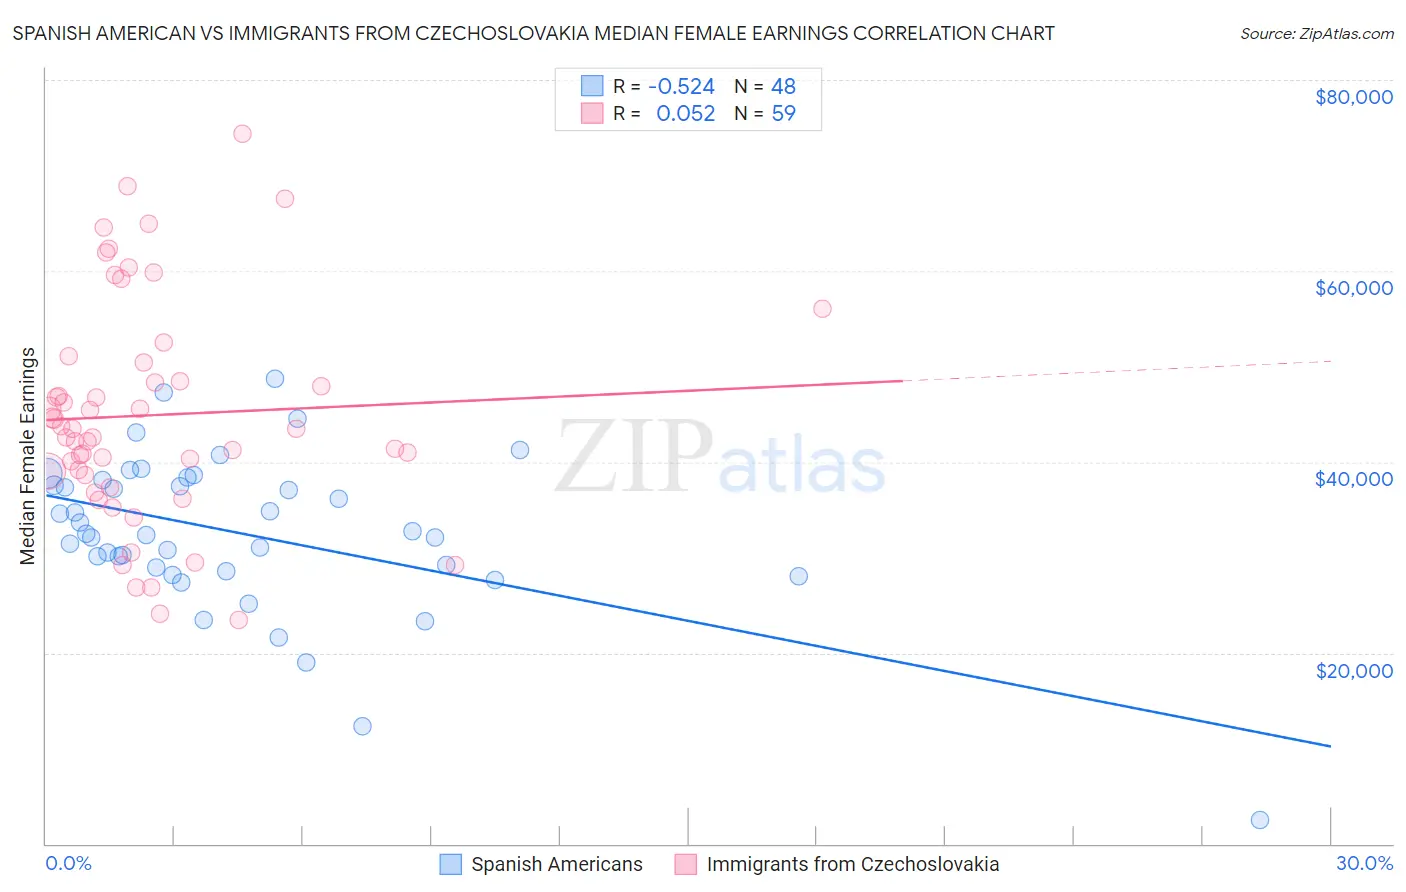 Spanish American vs Immigrants from Czechoslovakia Median Female Earnings